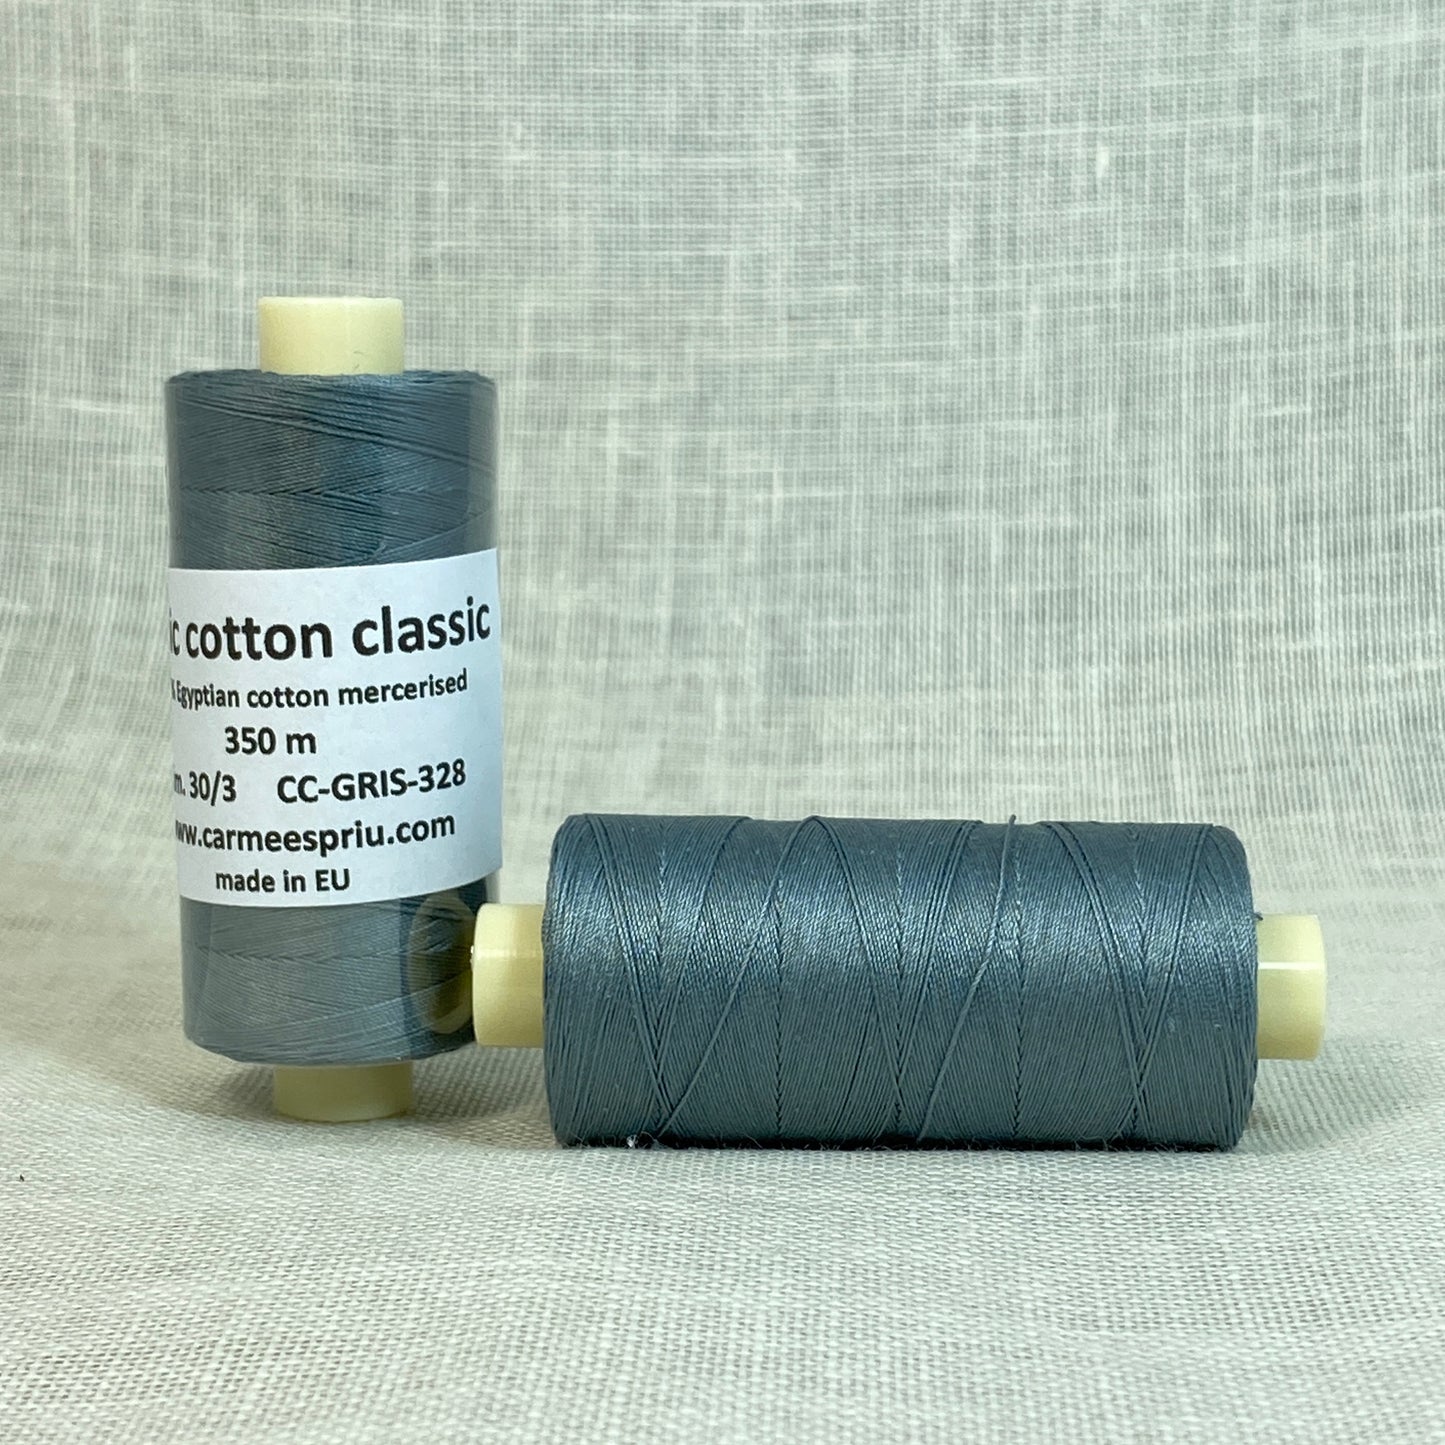 Basic cotton classic gris nº 328